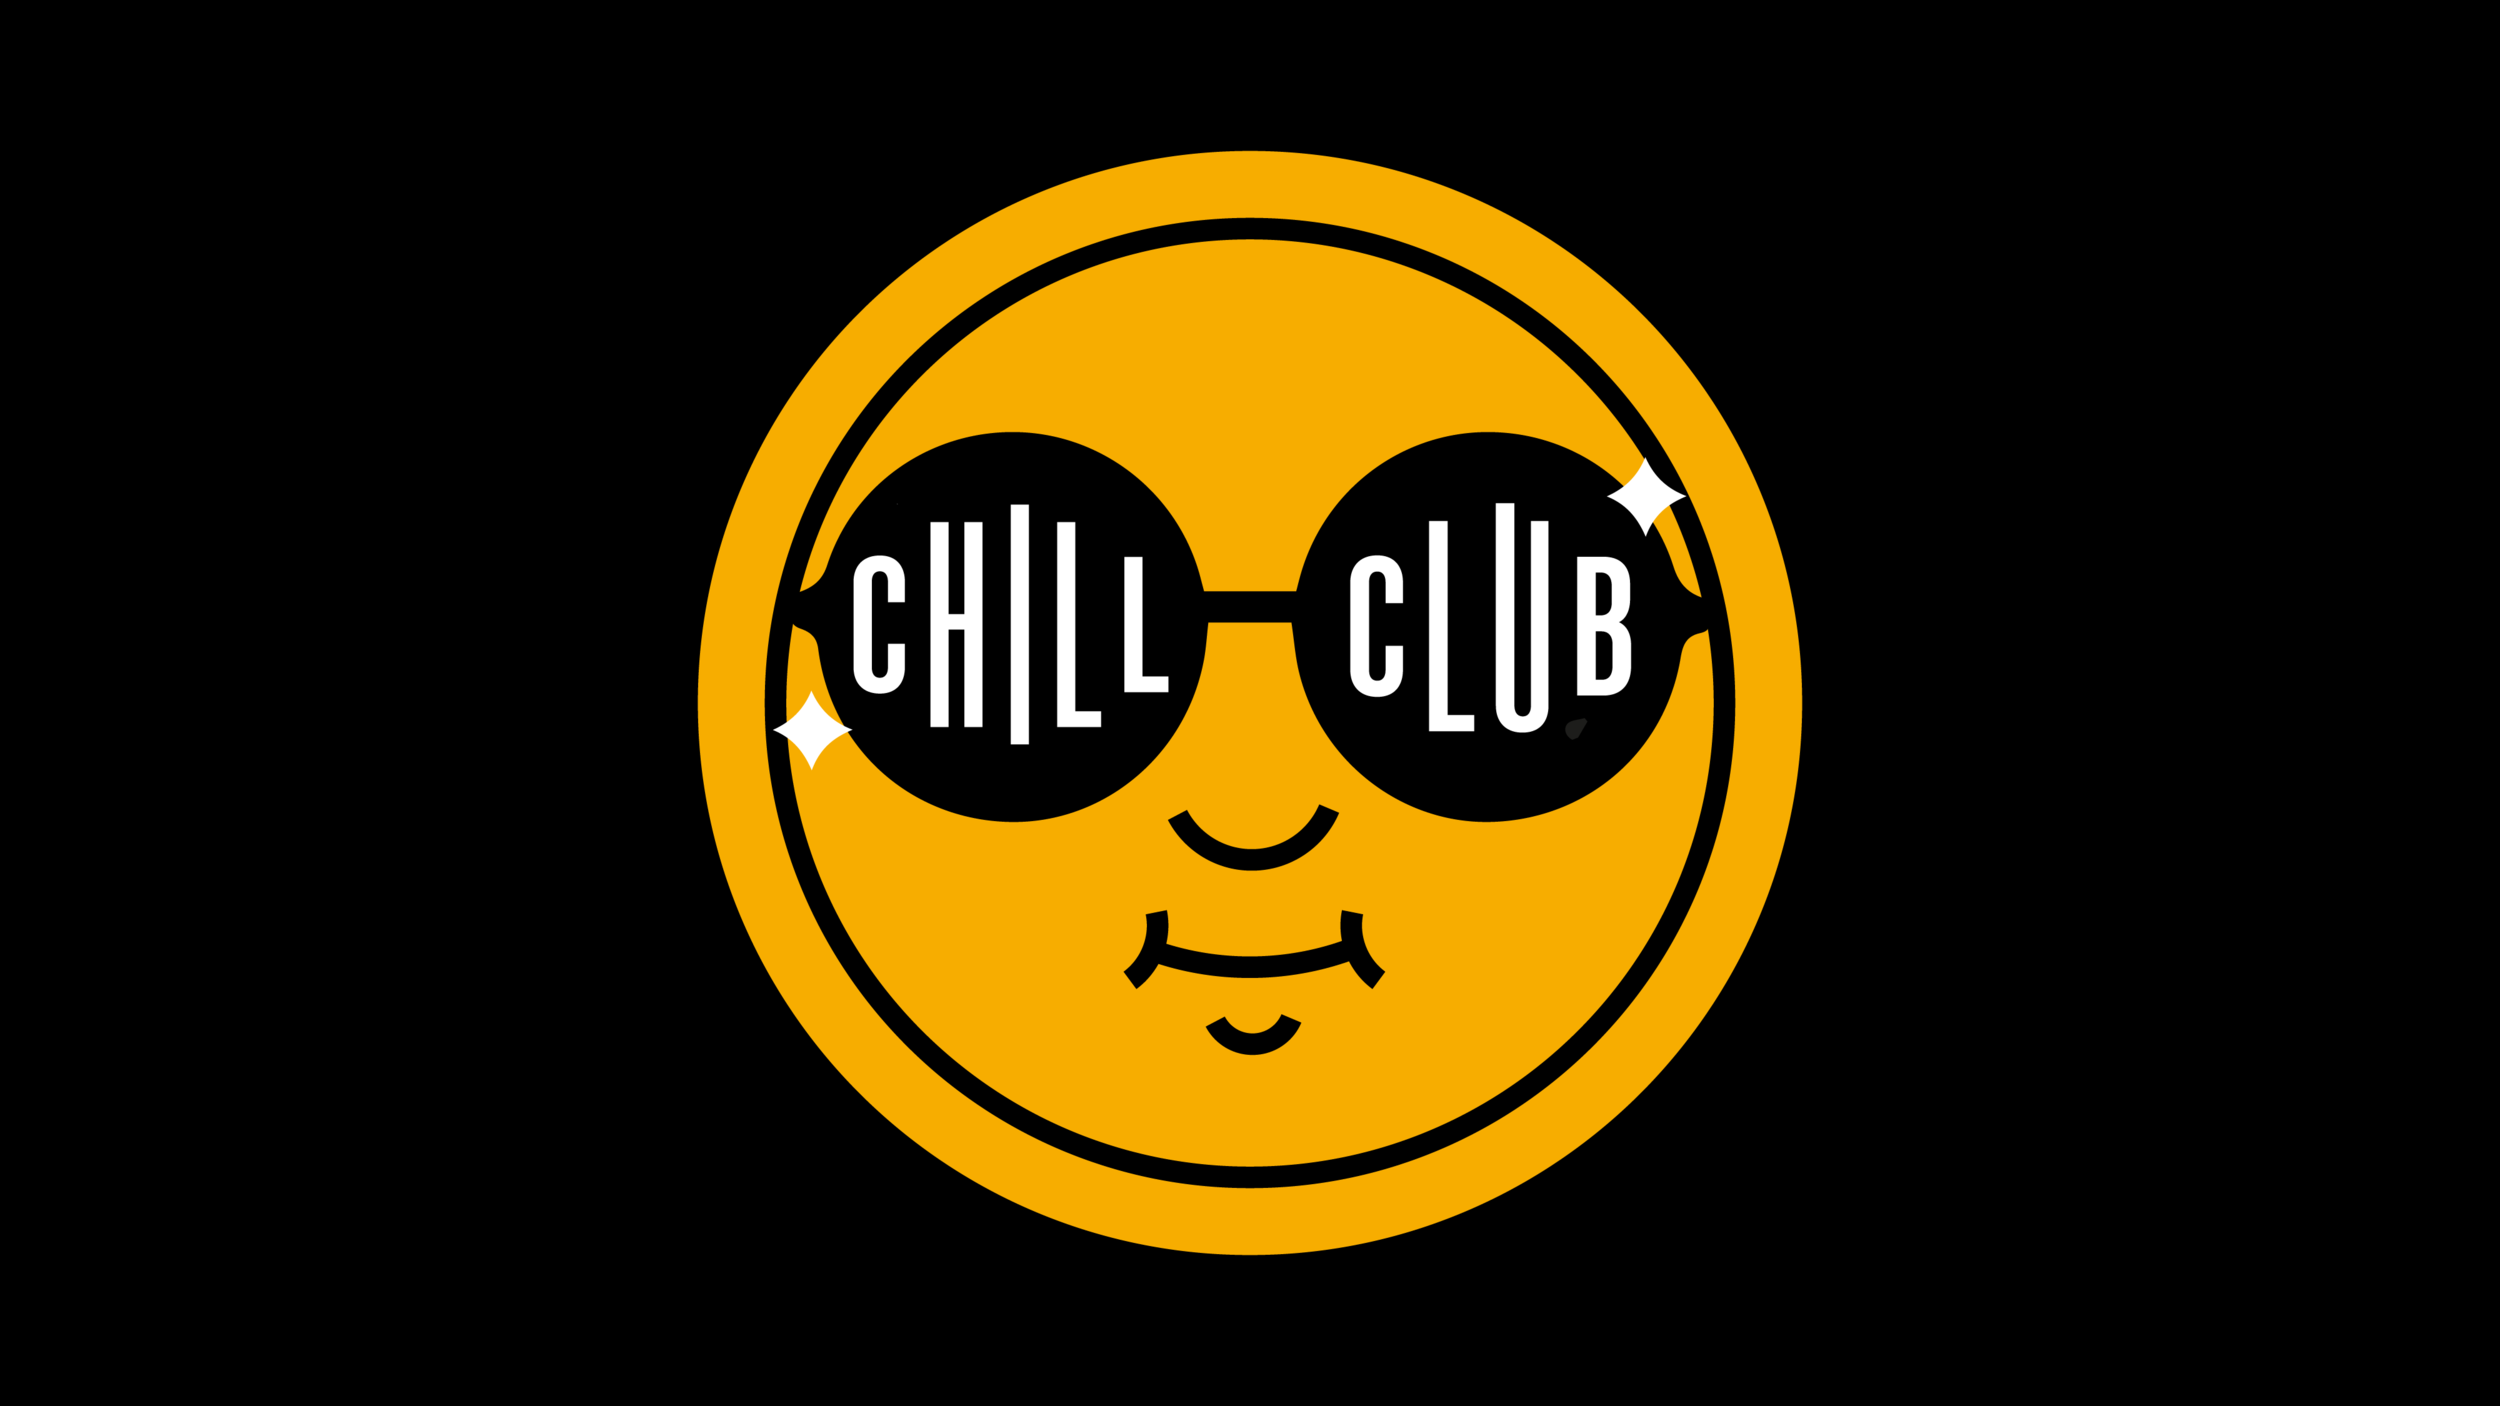 Chilling club